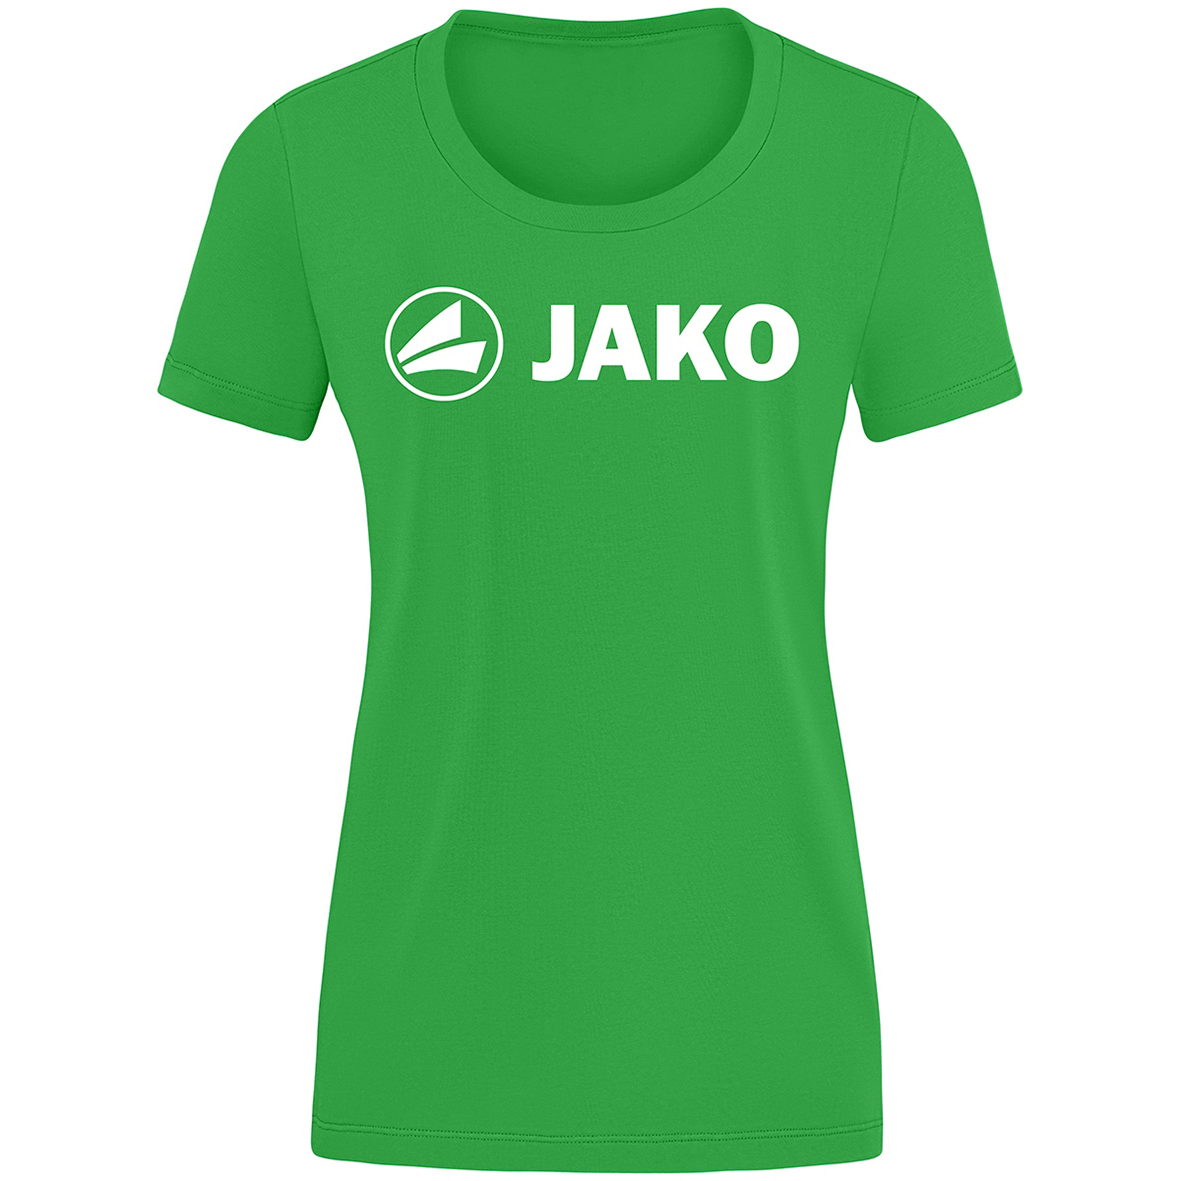 T-SHIRT JAKO PROMO, SOFT GREEN WOMEN.